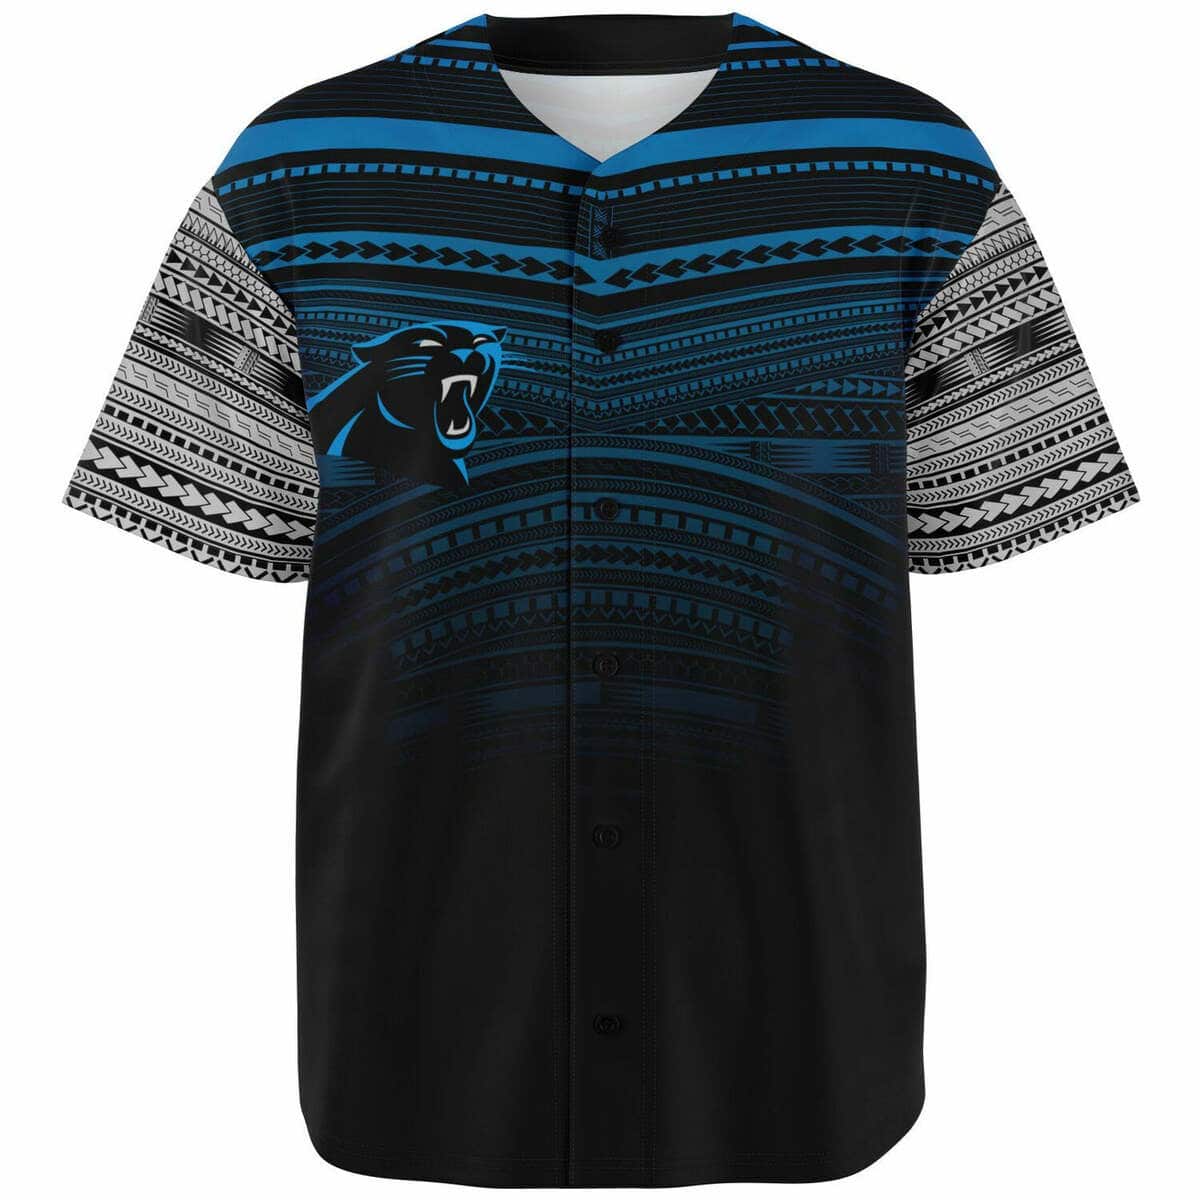 Polynesian NFL Carolina Panthers Baseball Jersey Black Blue White Gift For Crazy Fans